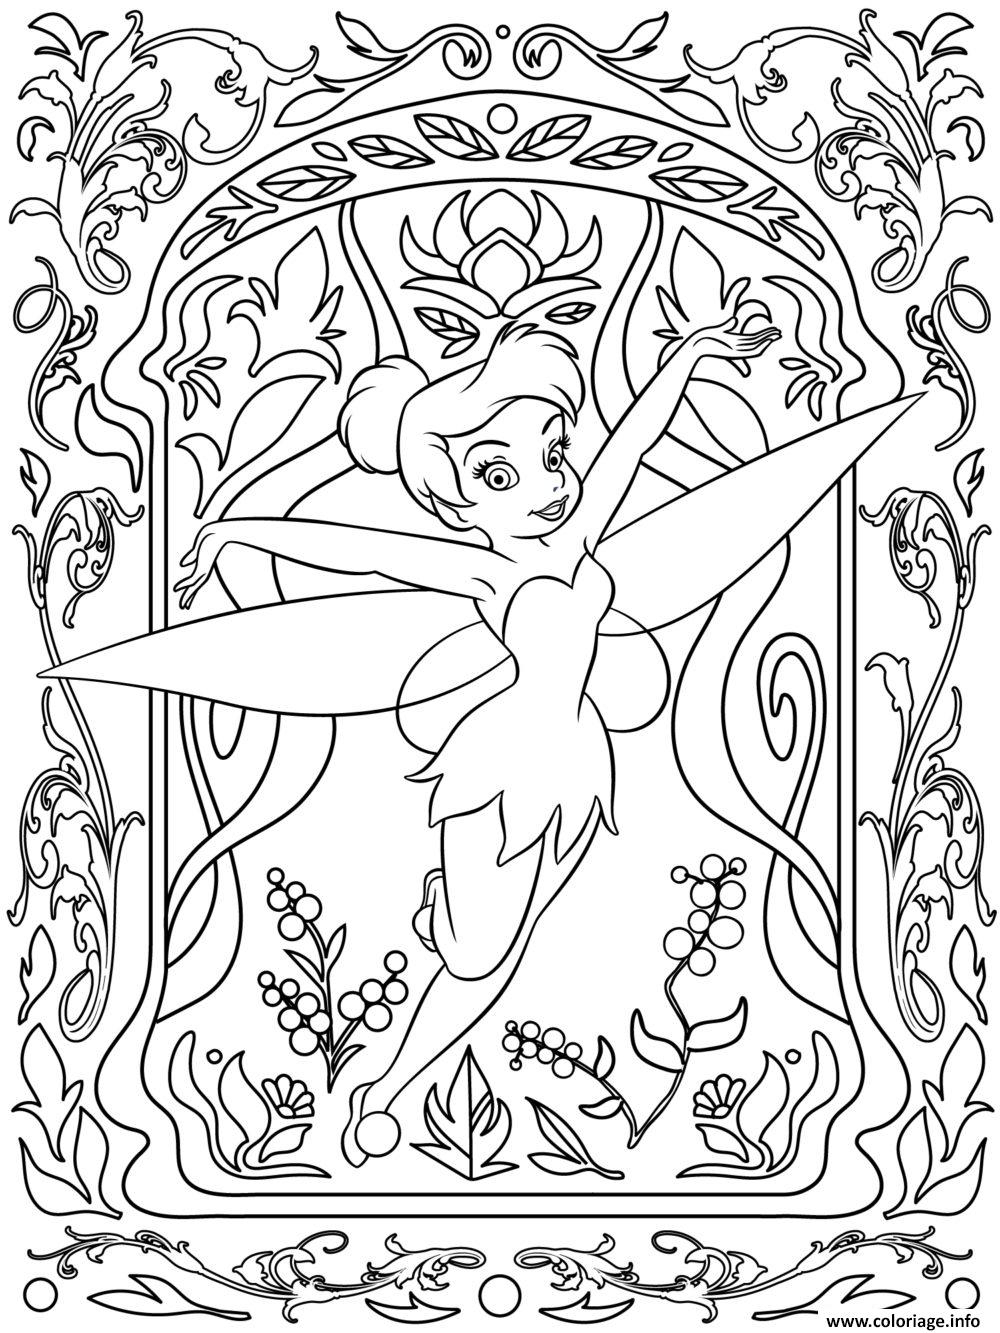 Coloriage Mandala Disney Tinker Bell Dessin Mandala Disney concernant Imprimer Coloriage Disney 